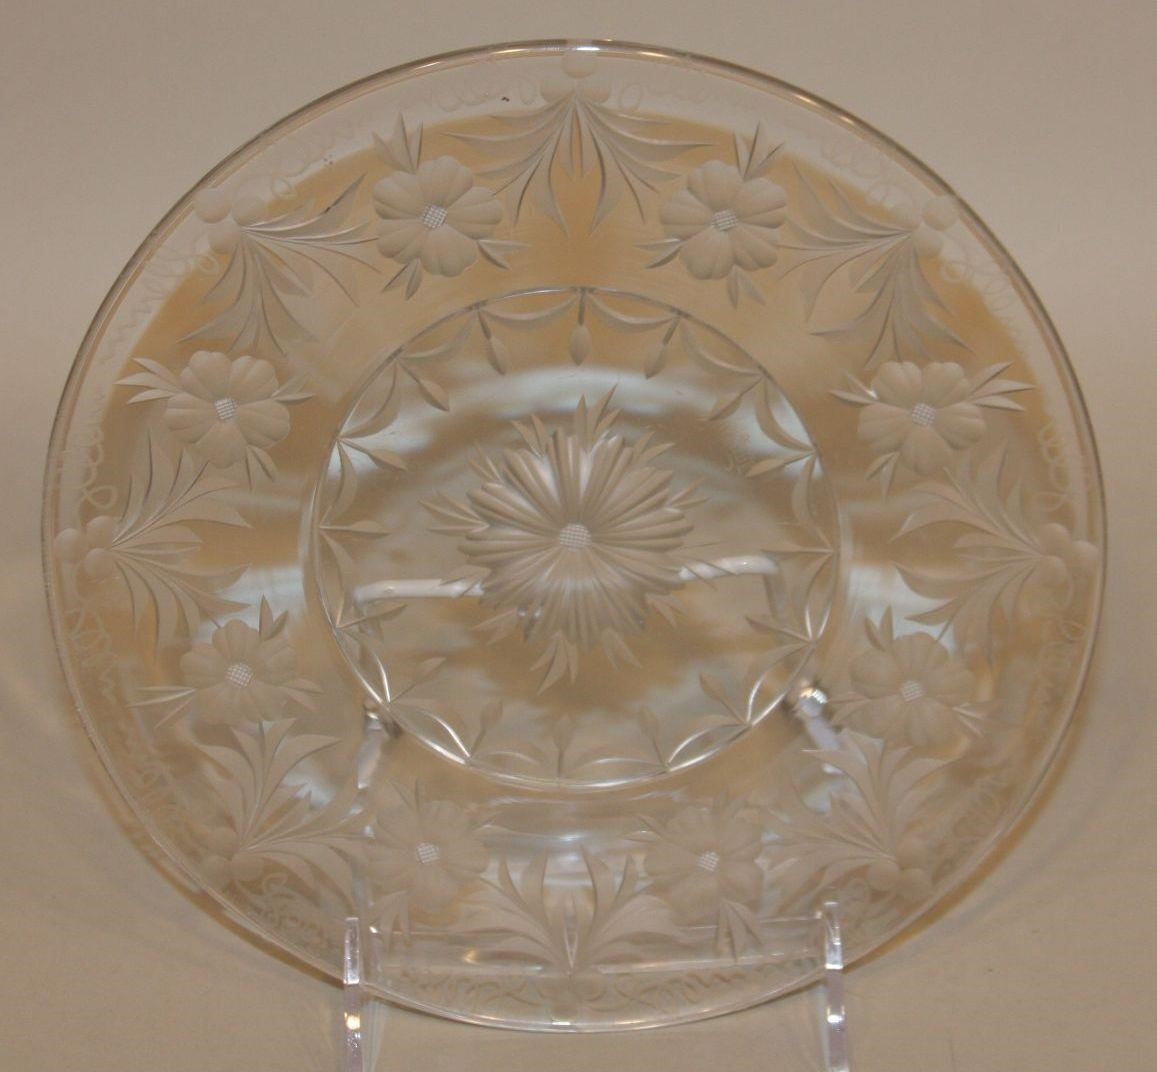 Tuthill Star & Phlox Brilliant Cut Glass Plate